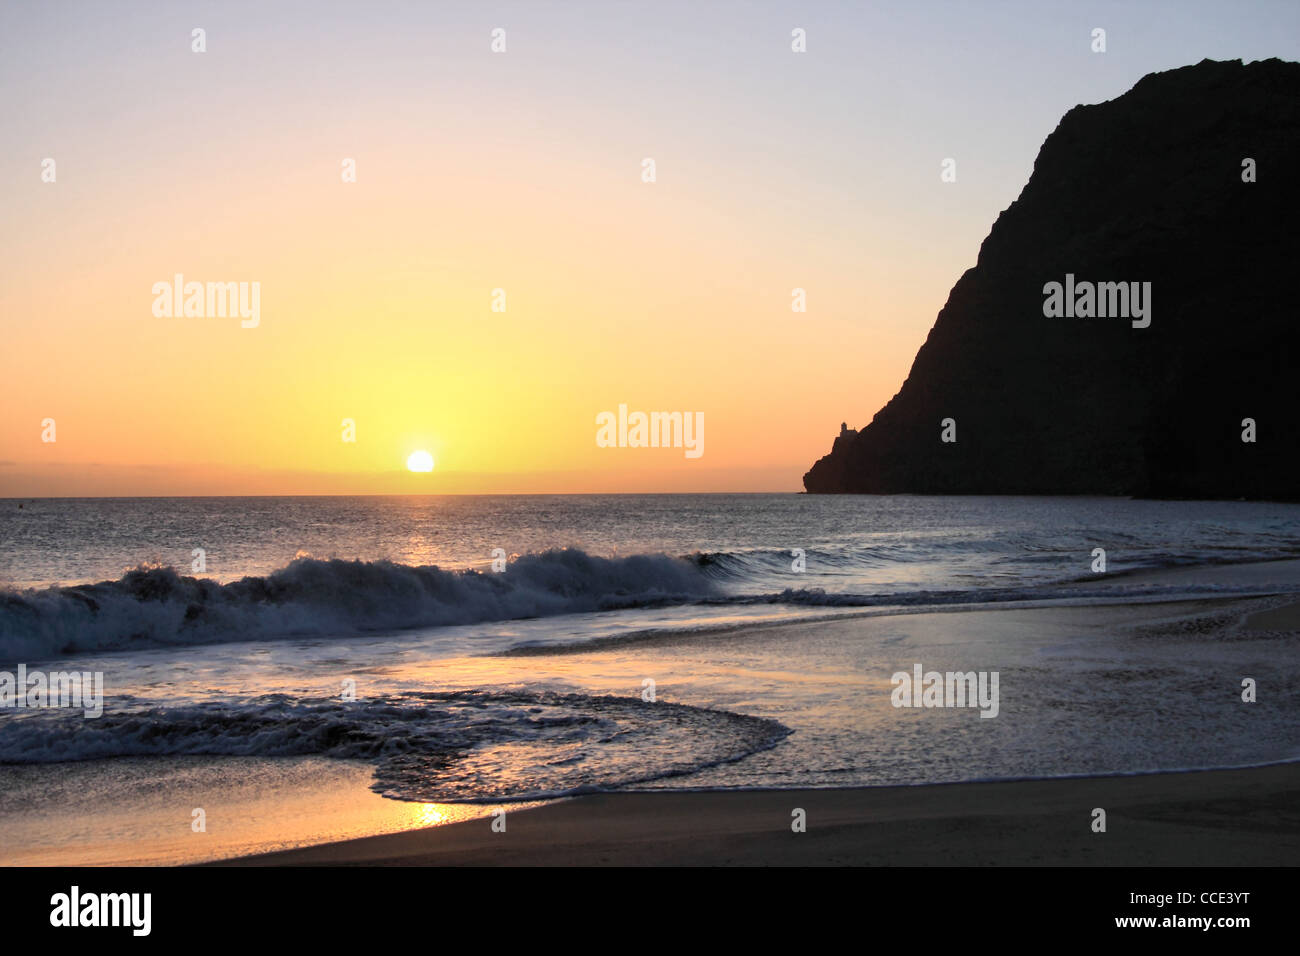 San Pedro beach at sunset, Sao Vicente Island, Cape Verde Archipelago Stock Photo